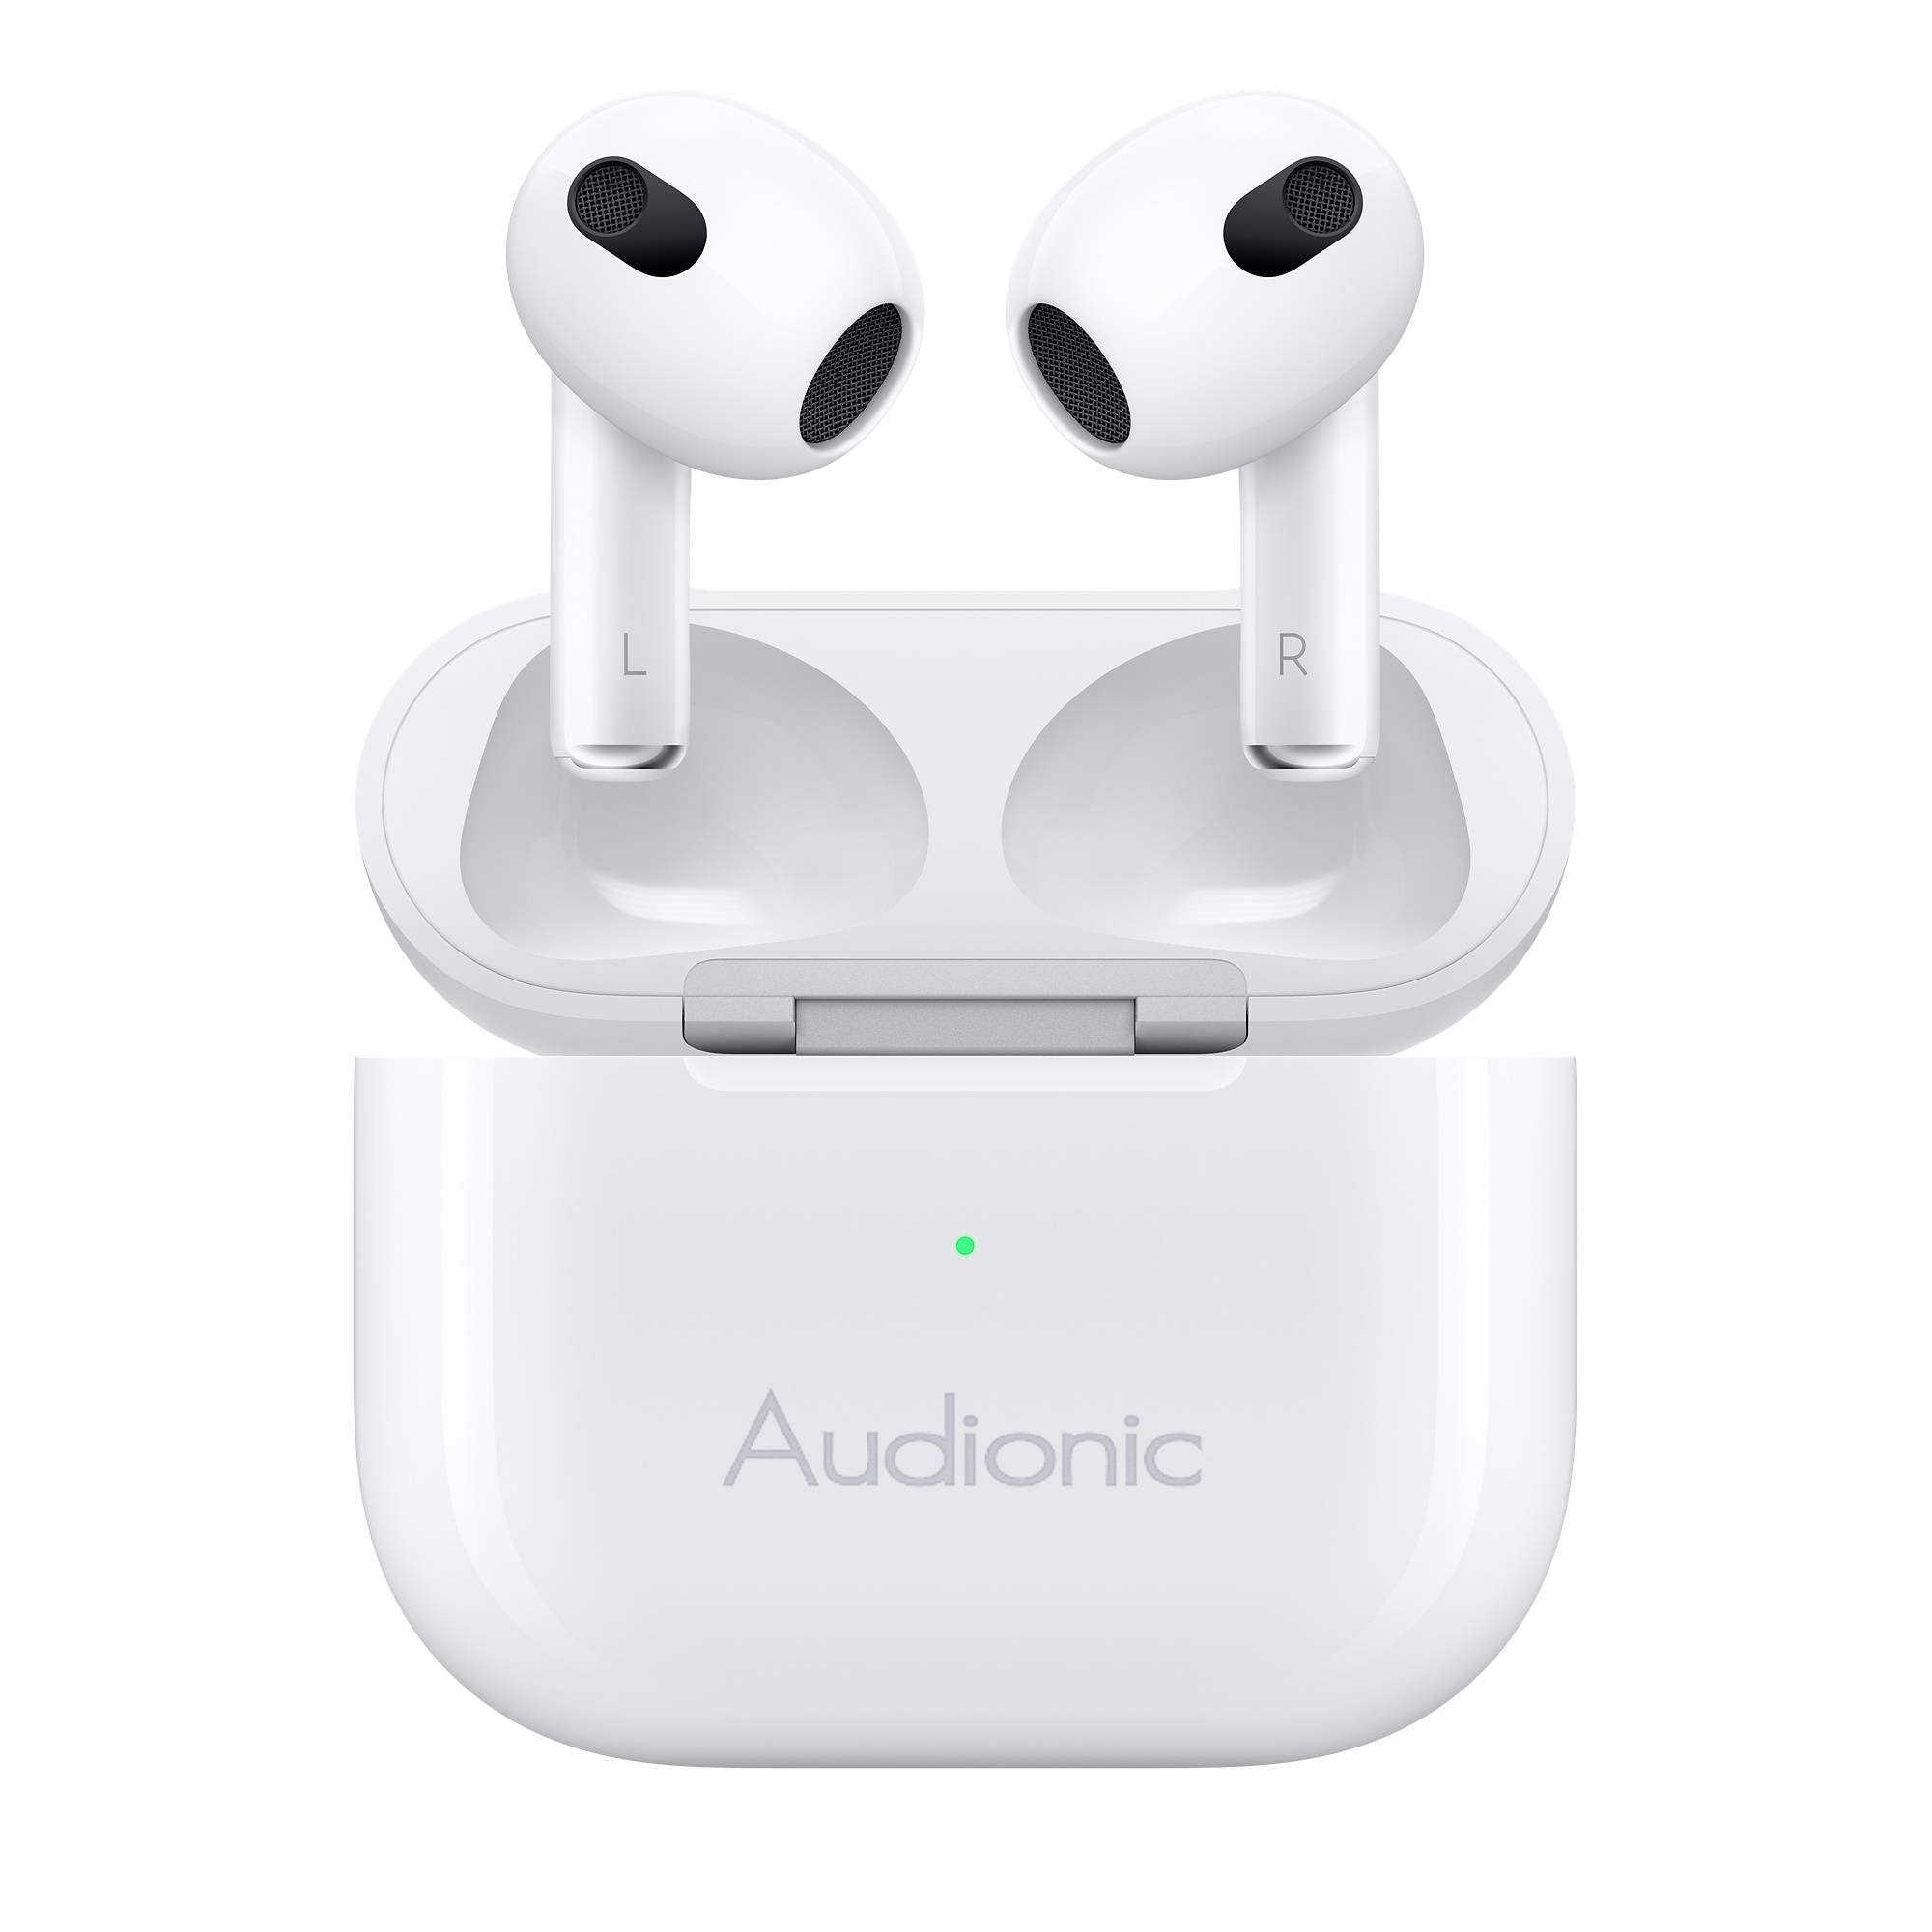 Audionic Airbud 05 Bluetooth Version 5.0 Wireless Charging  1 Year WARRANTY